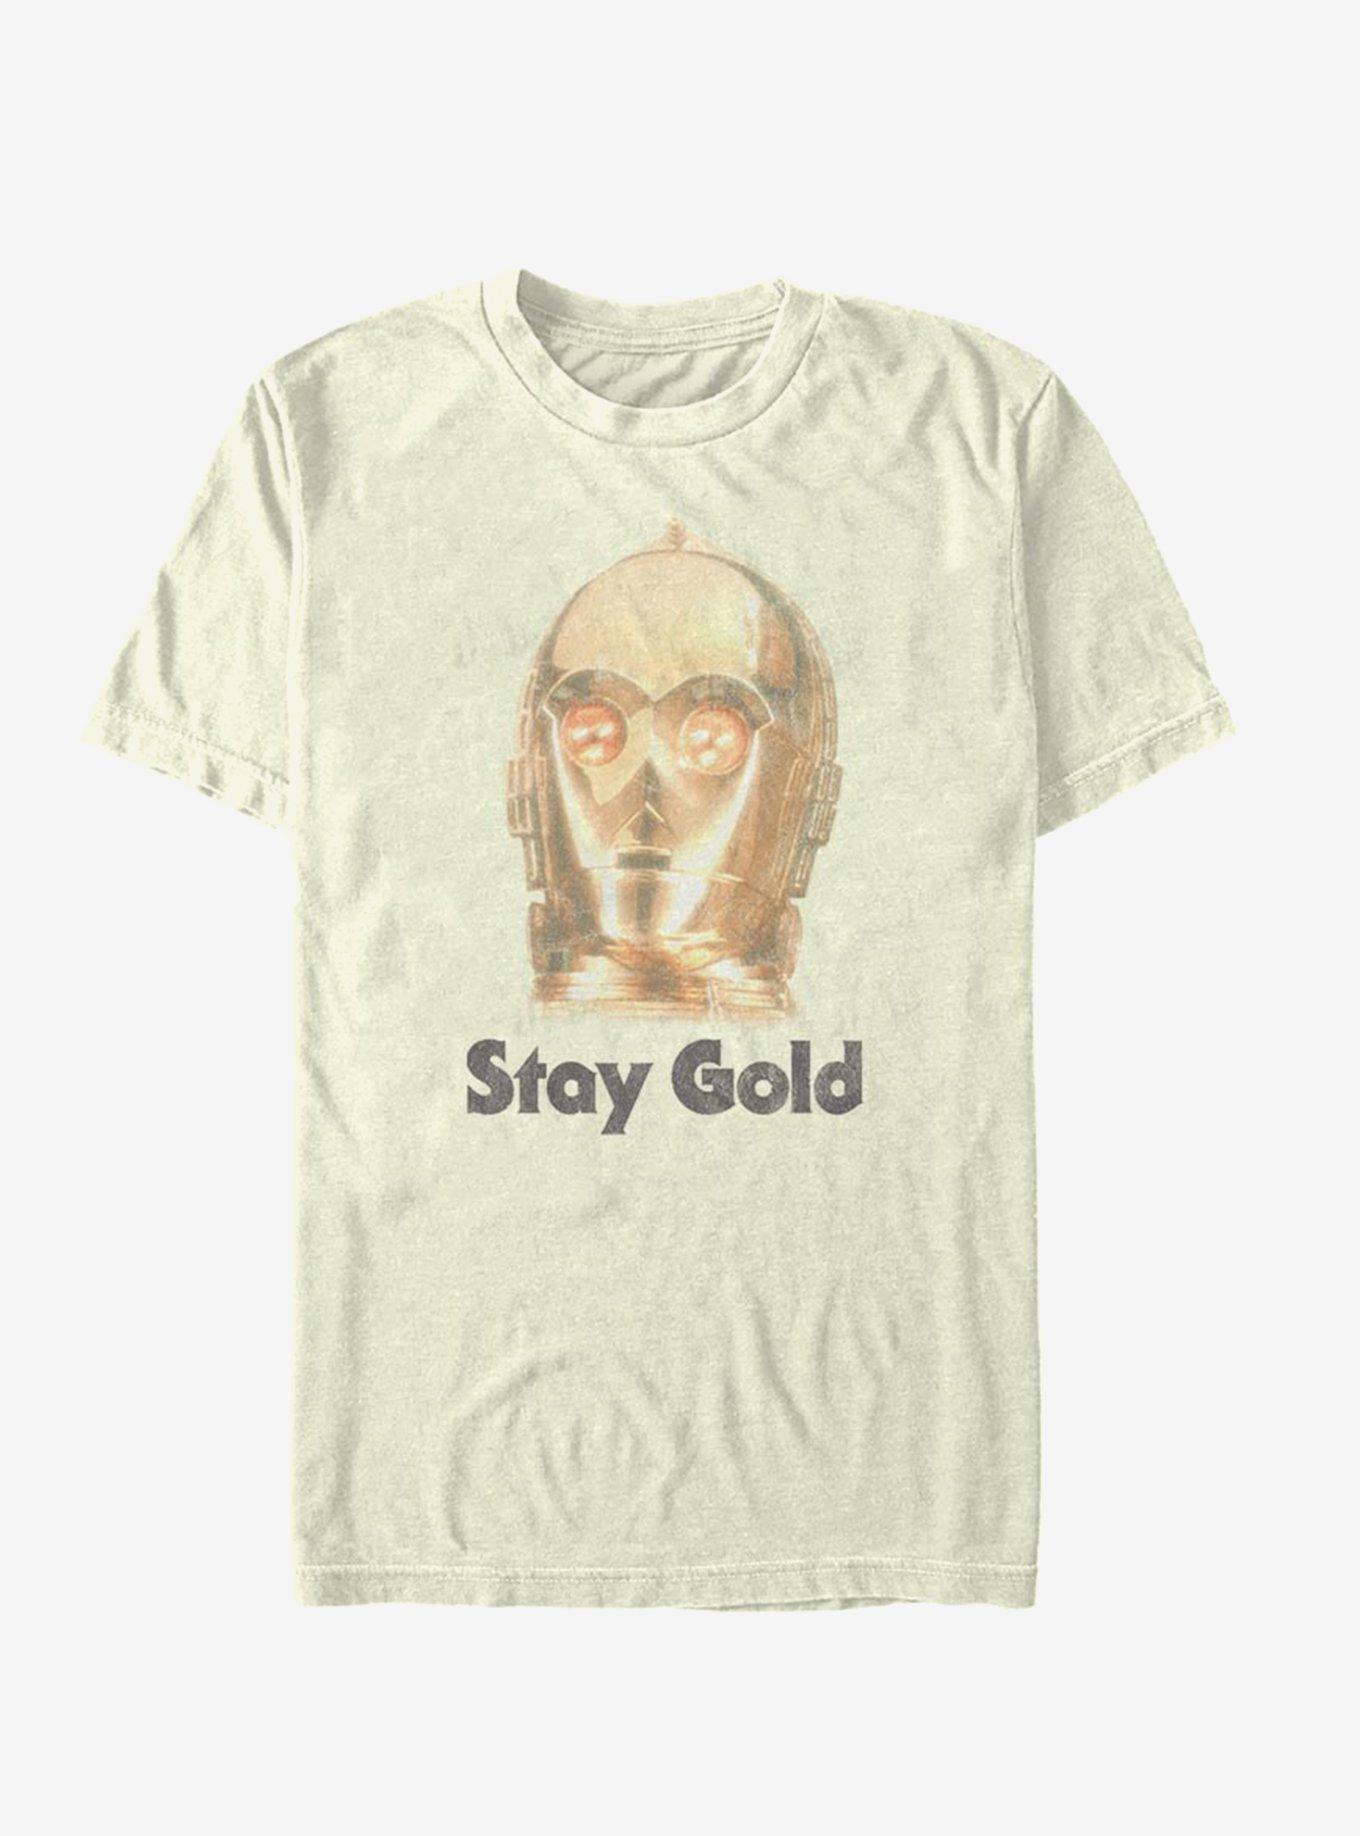 Star Wars Episode IX The Rise Of Skywalker Stay Gold T-Shirt